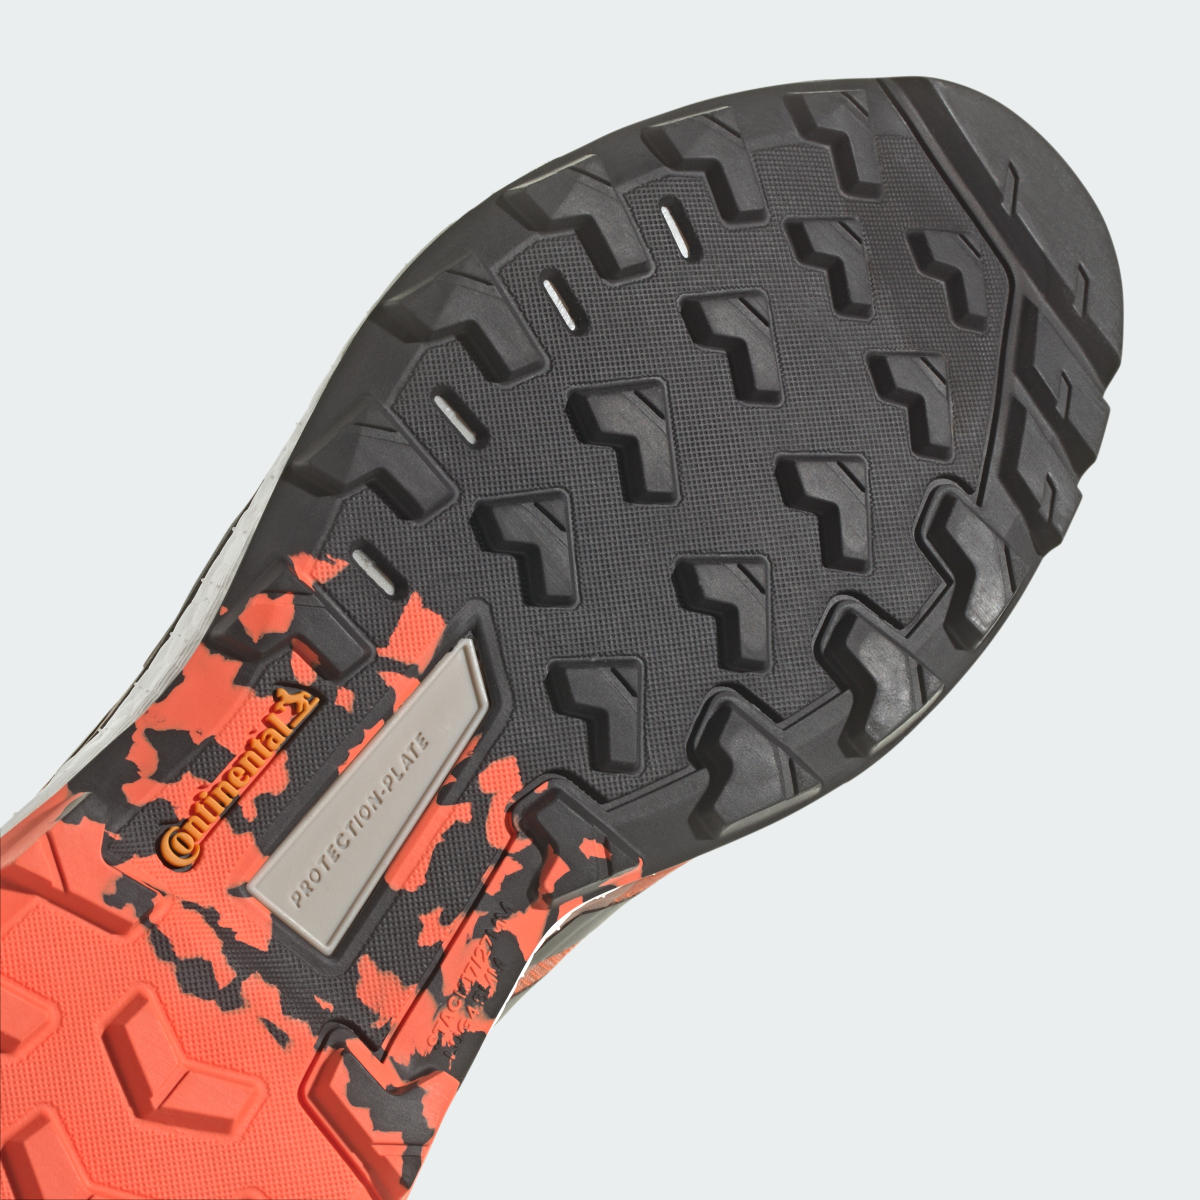 Adidas Terrex Skychaser GORE-TEX Hiking Shoes 2.0. 9